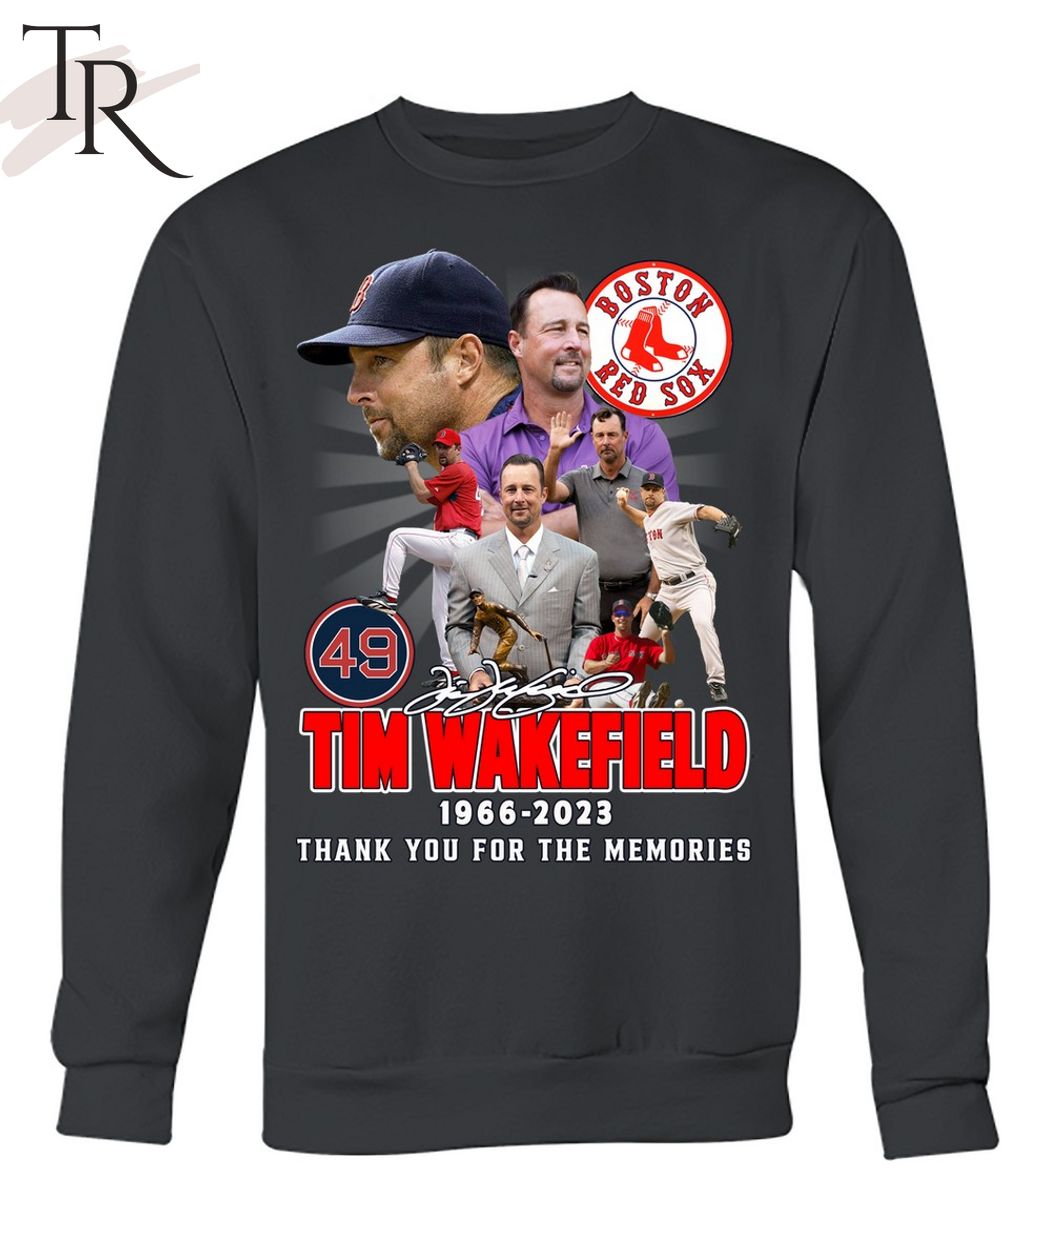 Boston Red Sox pitcher Tim Wakefield: In memoriam, 1966-2023